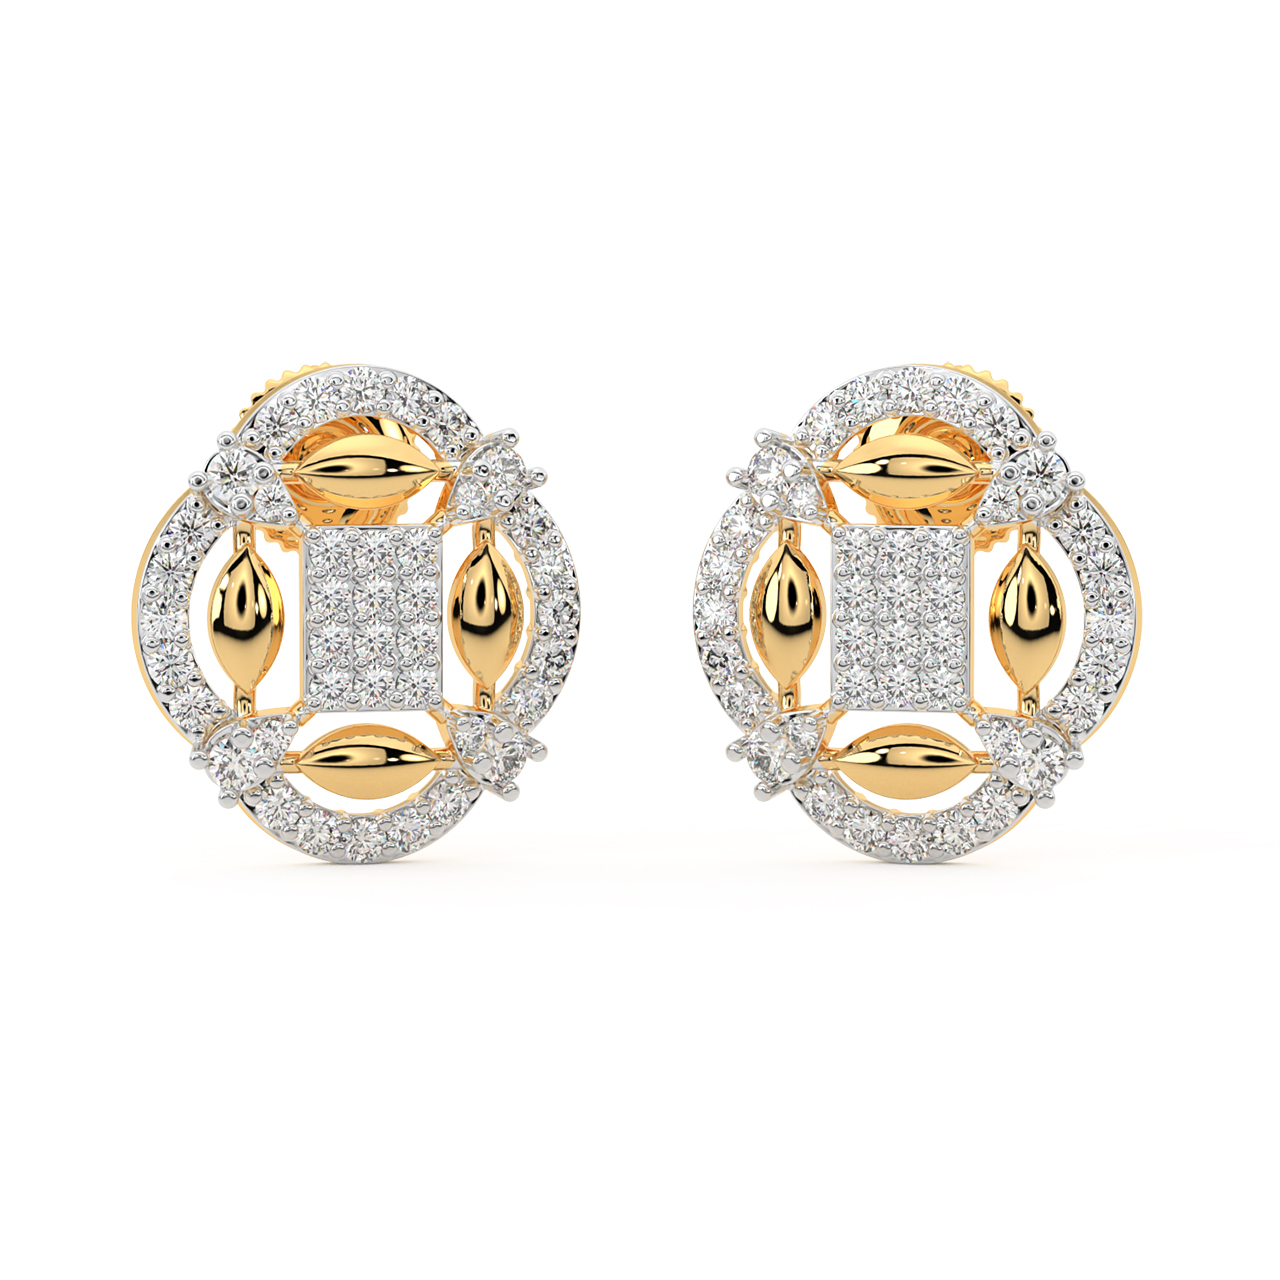 Swaraj ki real touch look American diamond studs girls look like awesome  Earrings  Studs